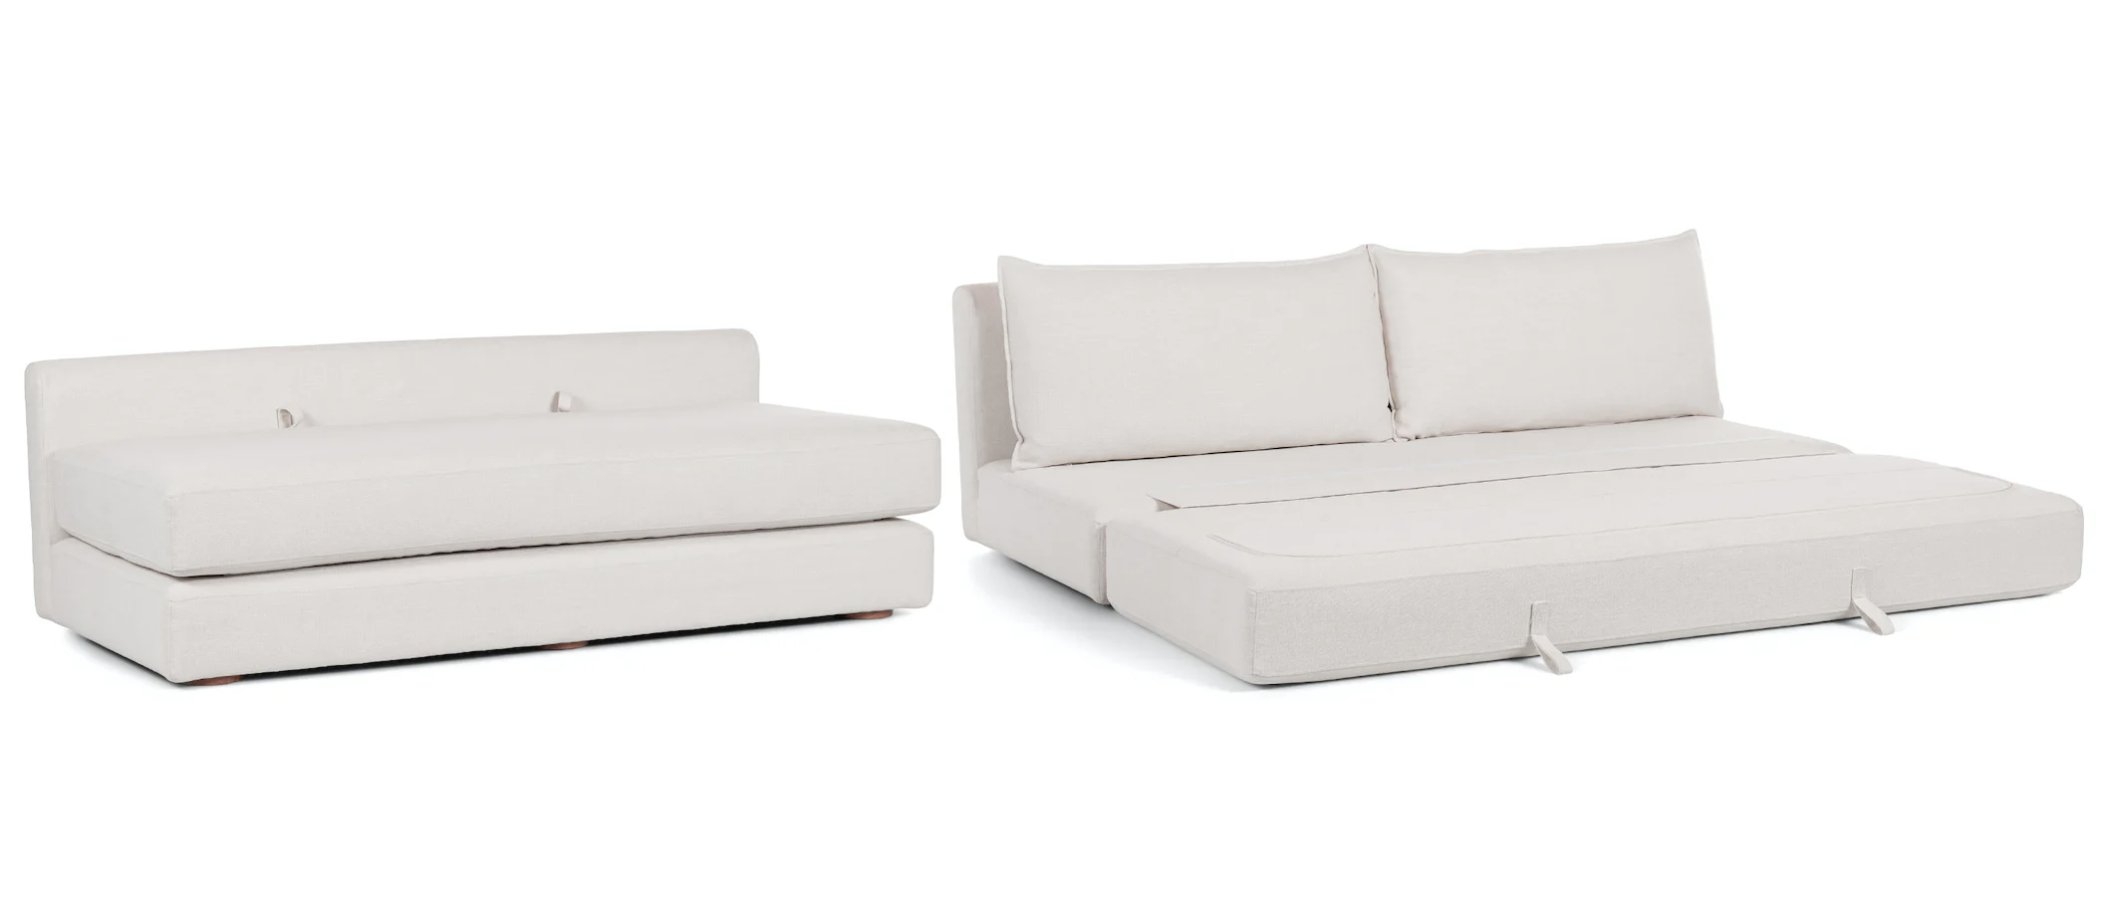 Braam Vintage White Sofa Bed - Image 2